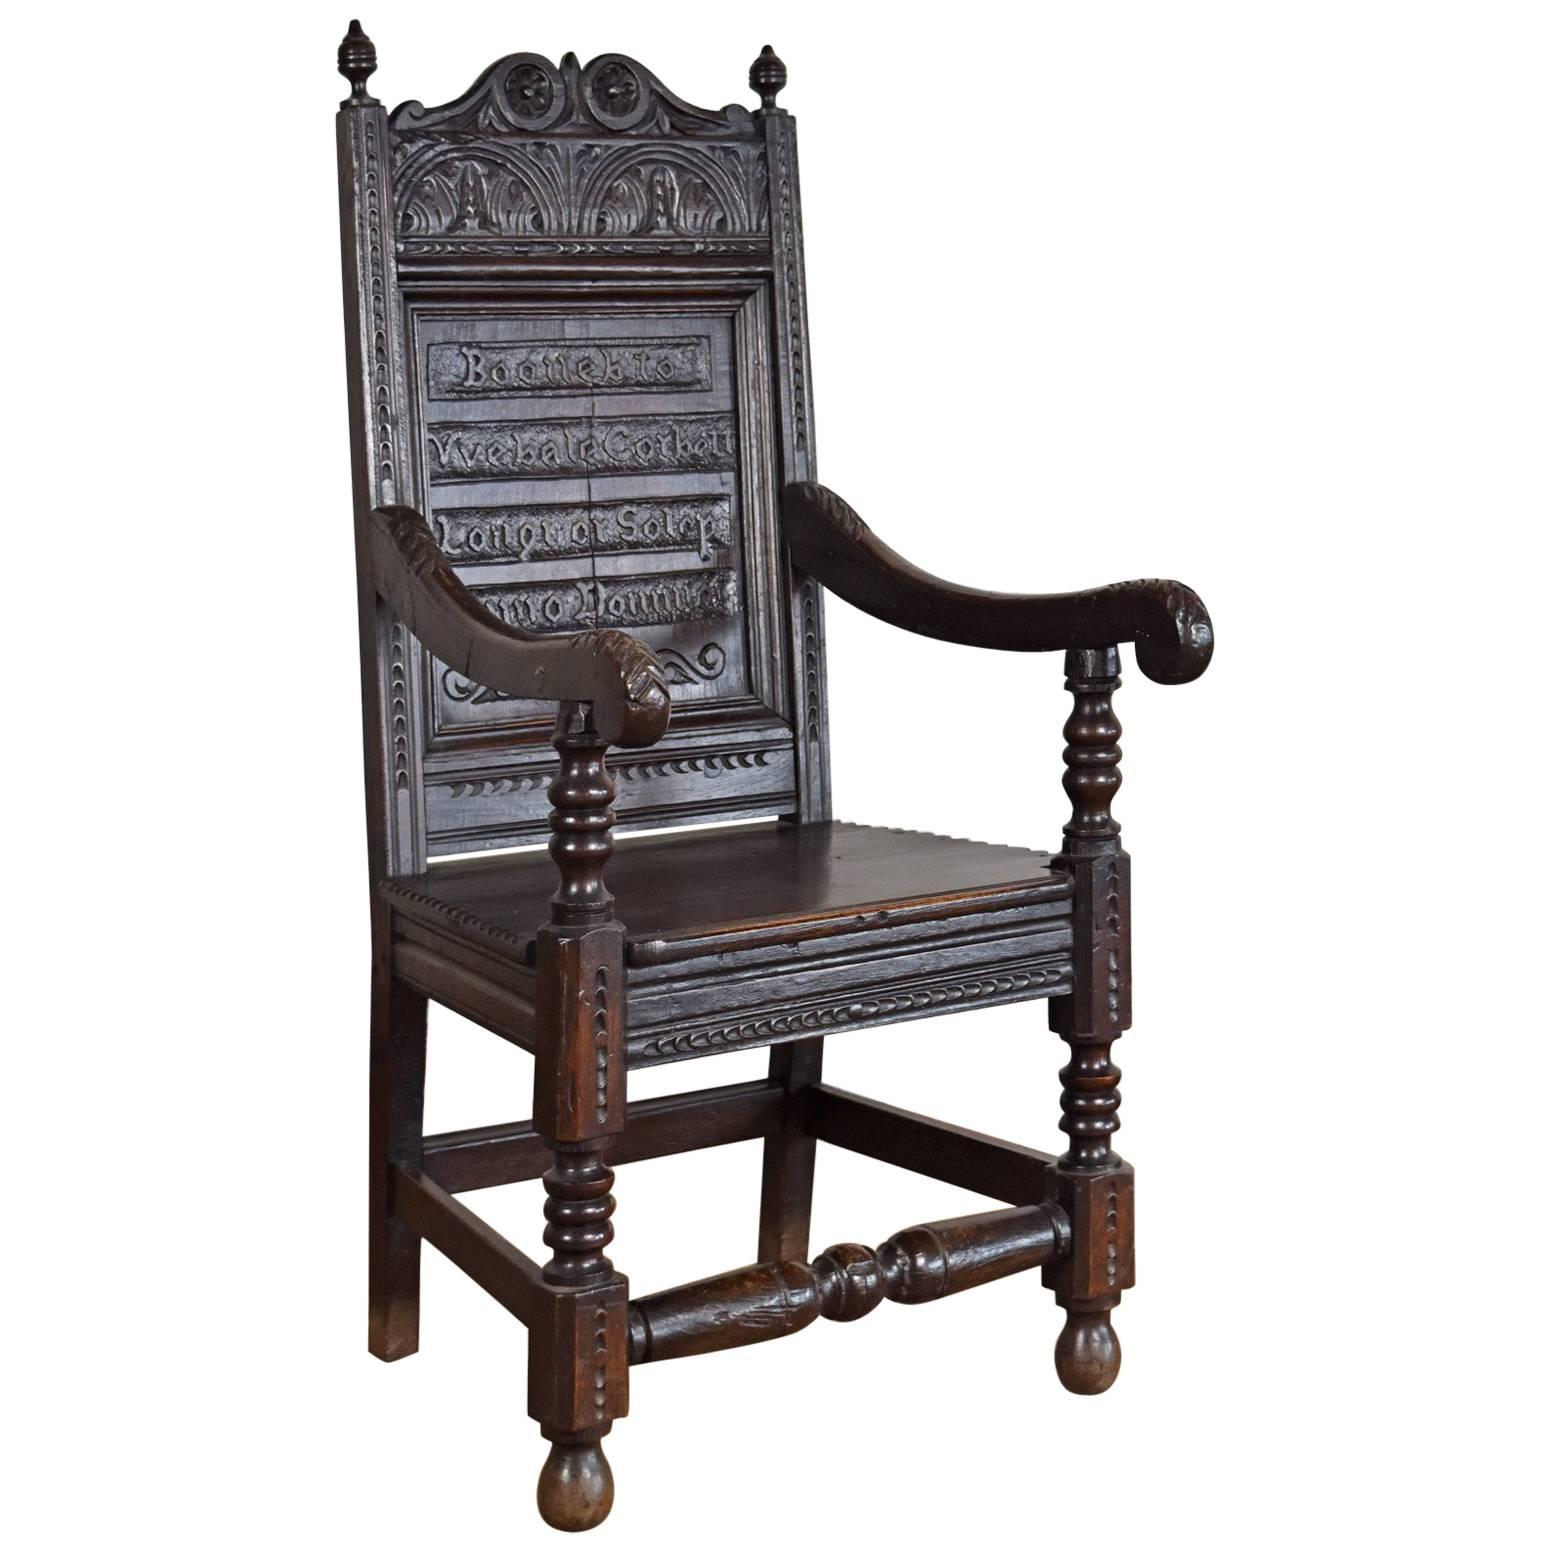  Englischer Wainscot-Sessel aus Eichenholz im Jacobean-Stil